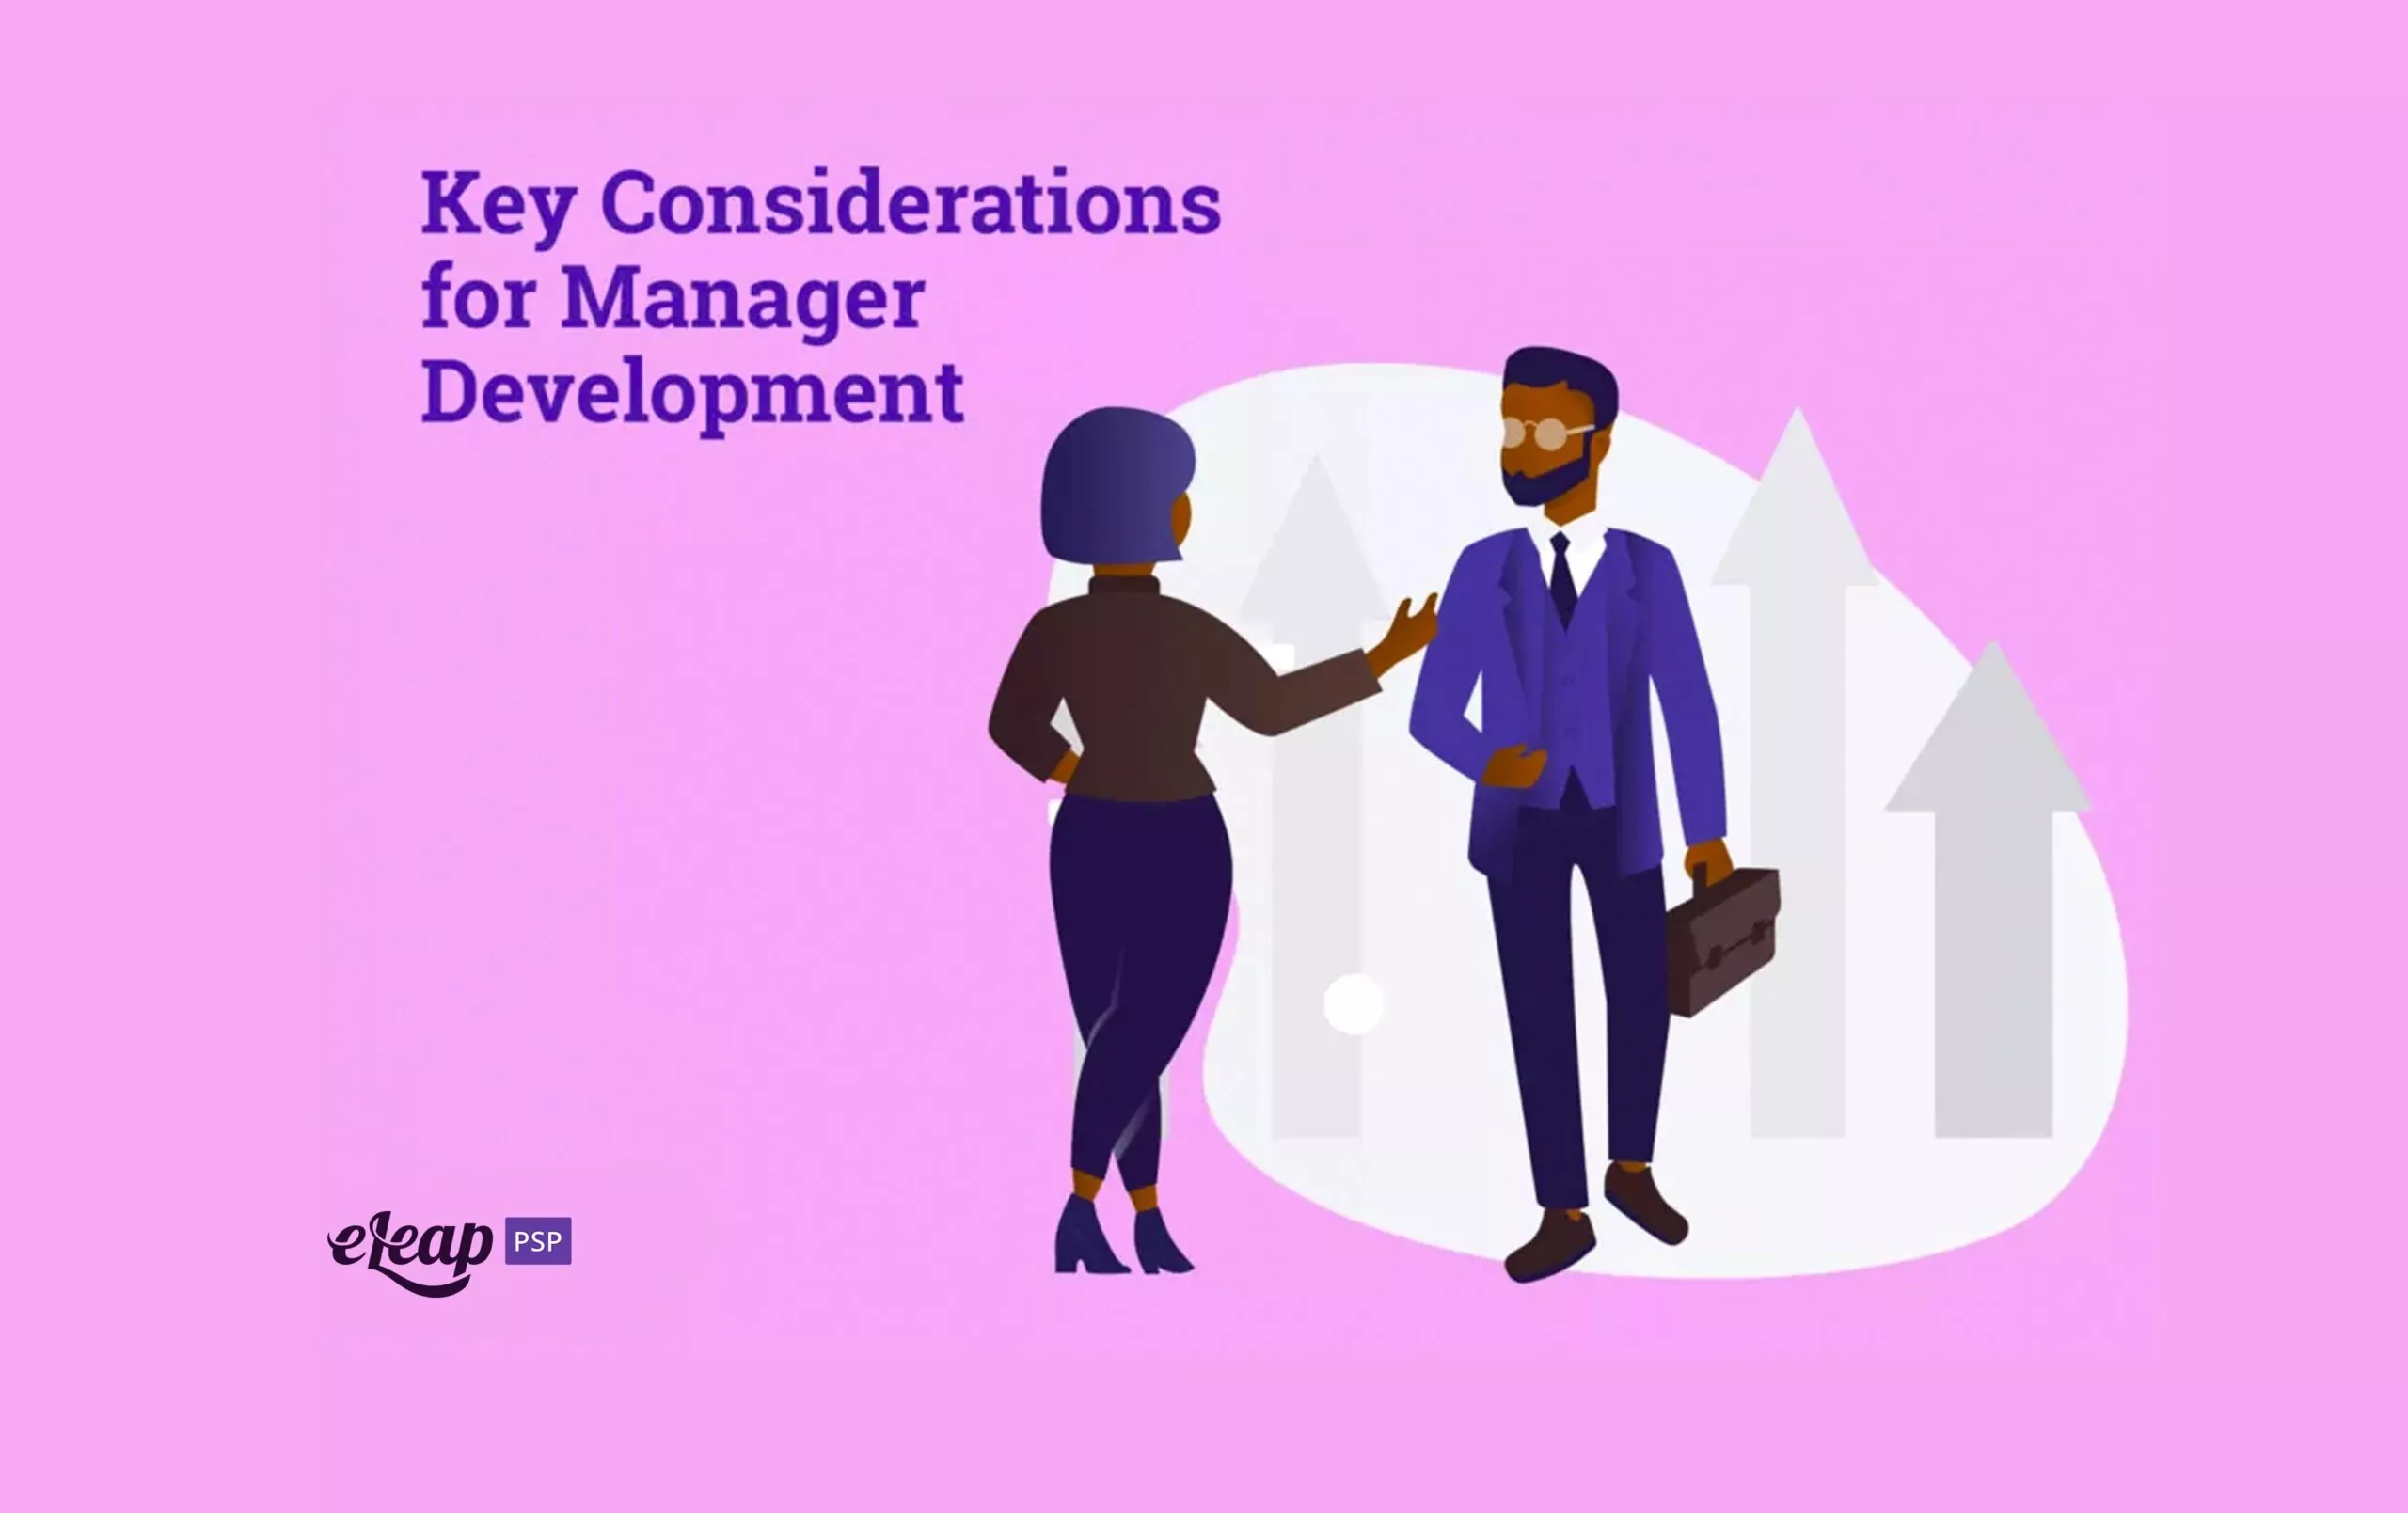 manager development definition